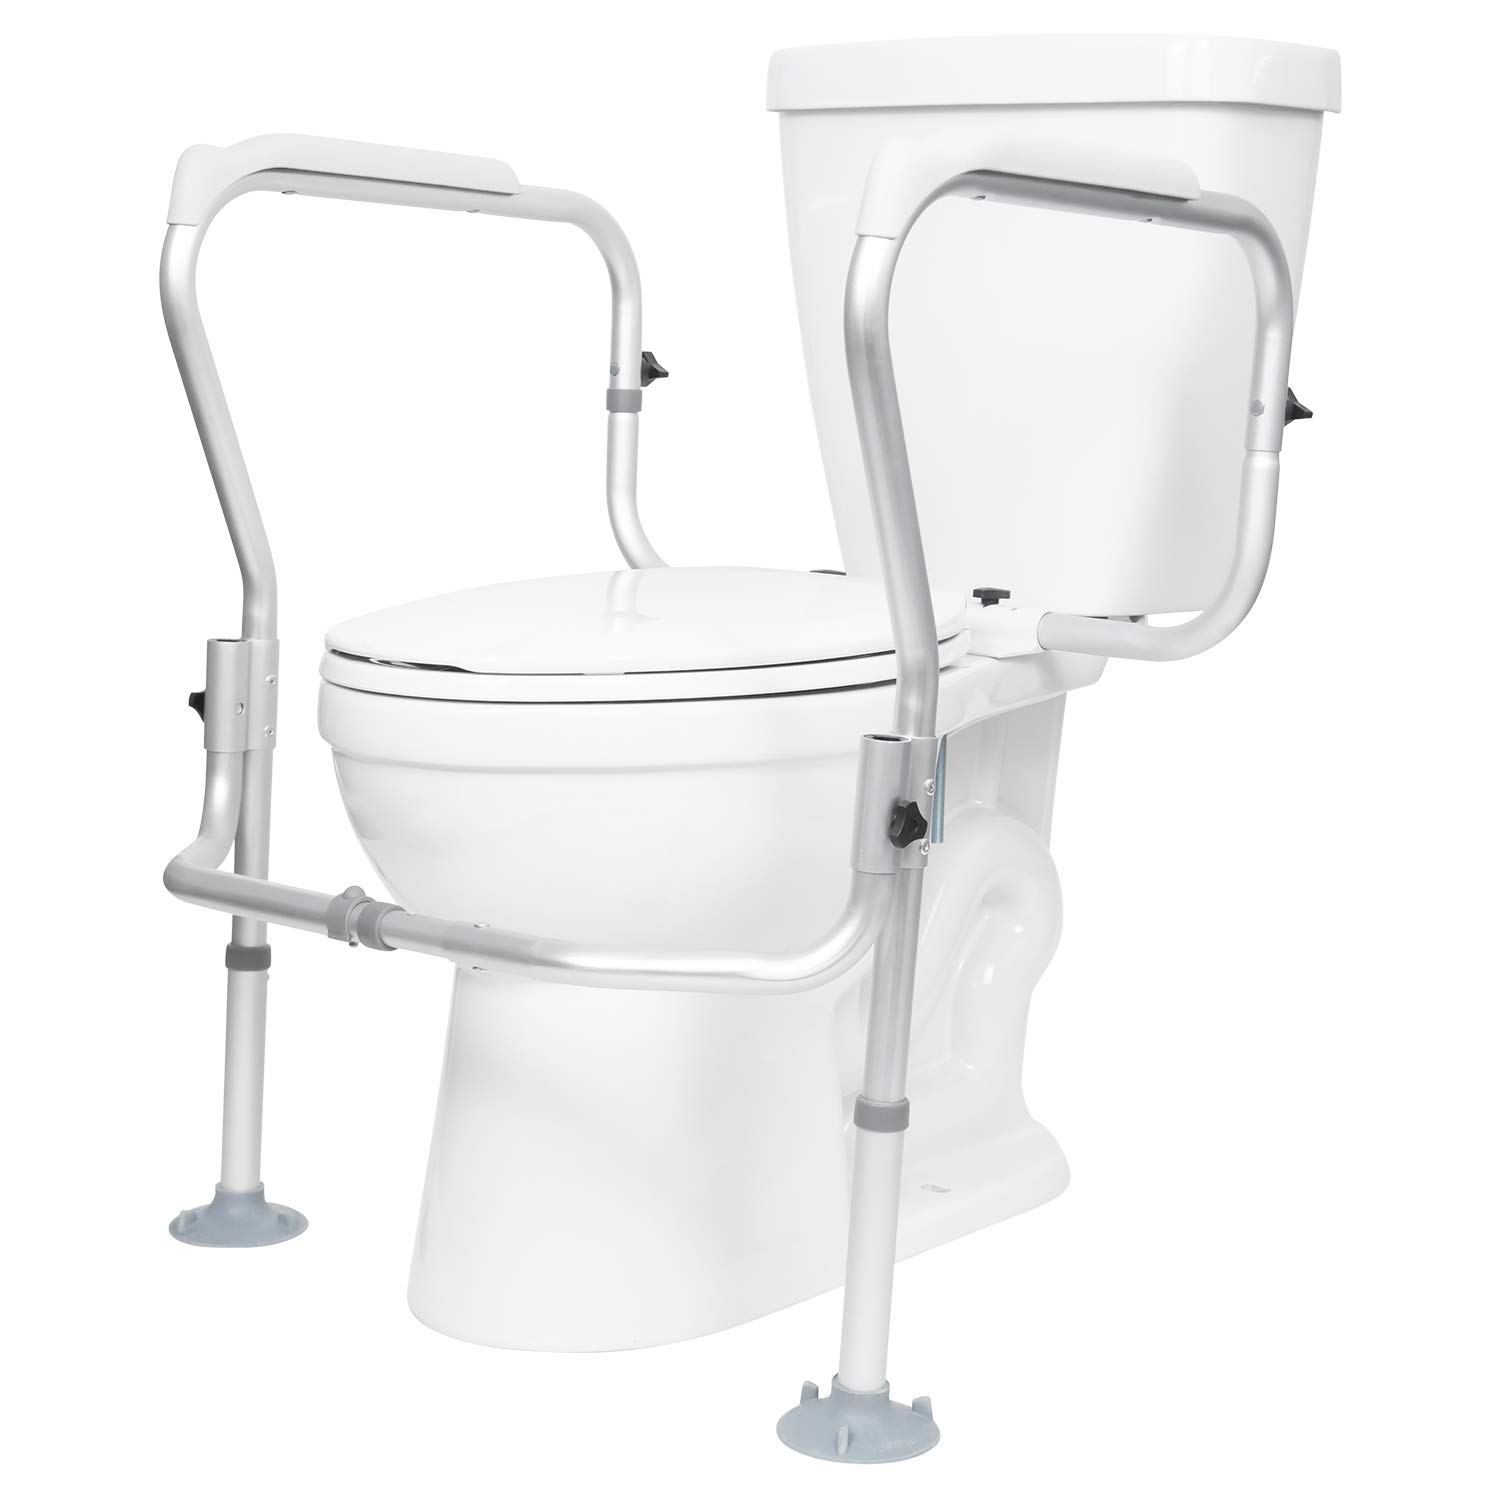 Vive Toilet Seat Riser - Raised Elevated Handle for Seniors